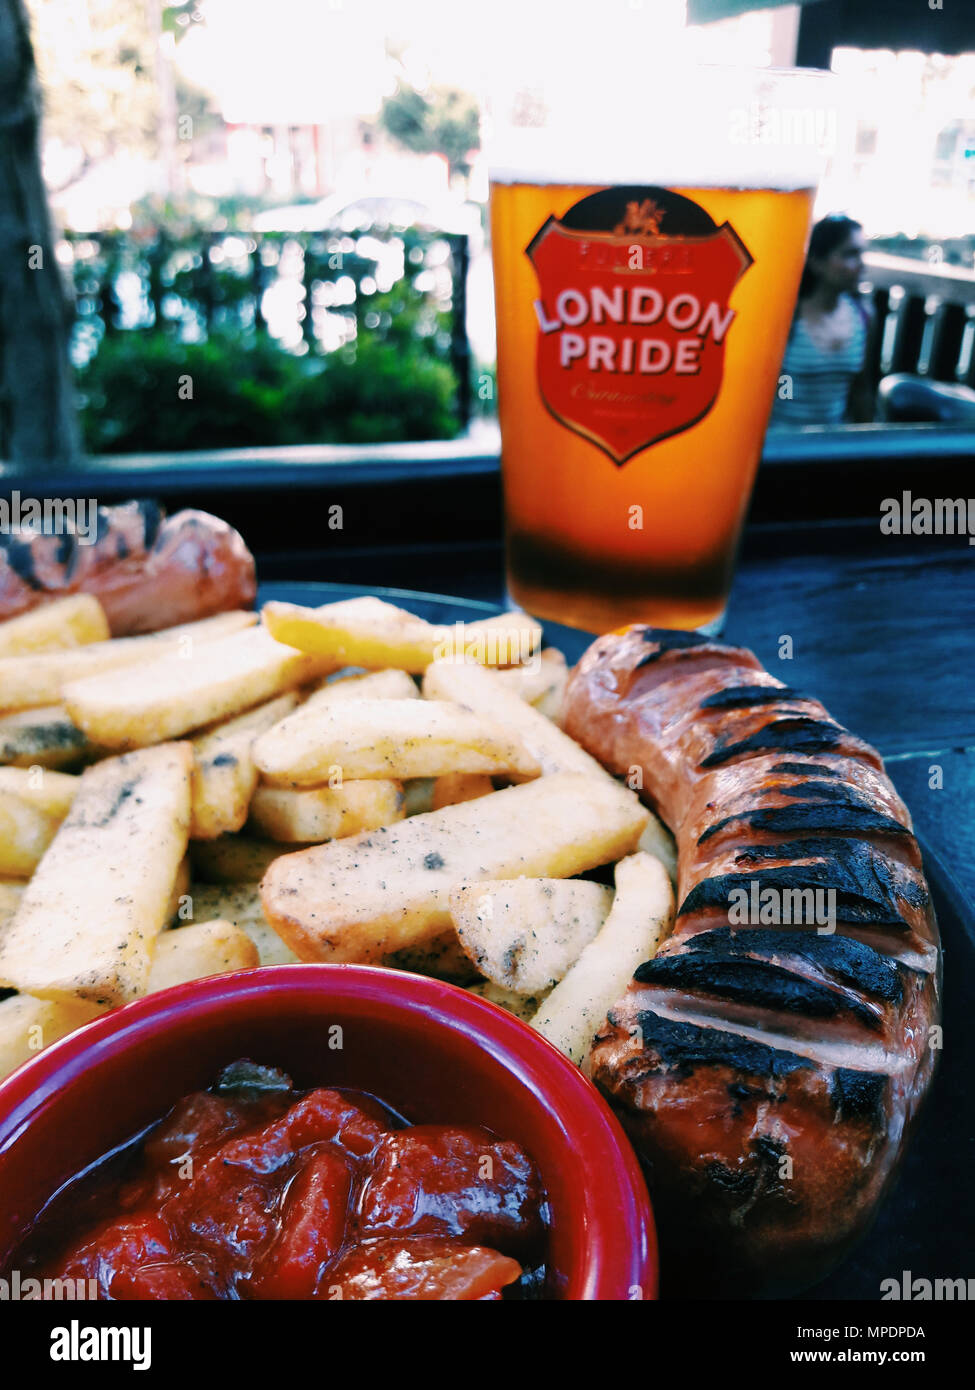 London Pride Beer with Frankfurter Sausage. fast food concept. Stock Photo